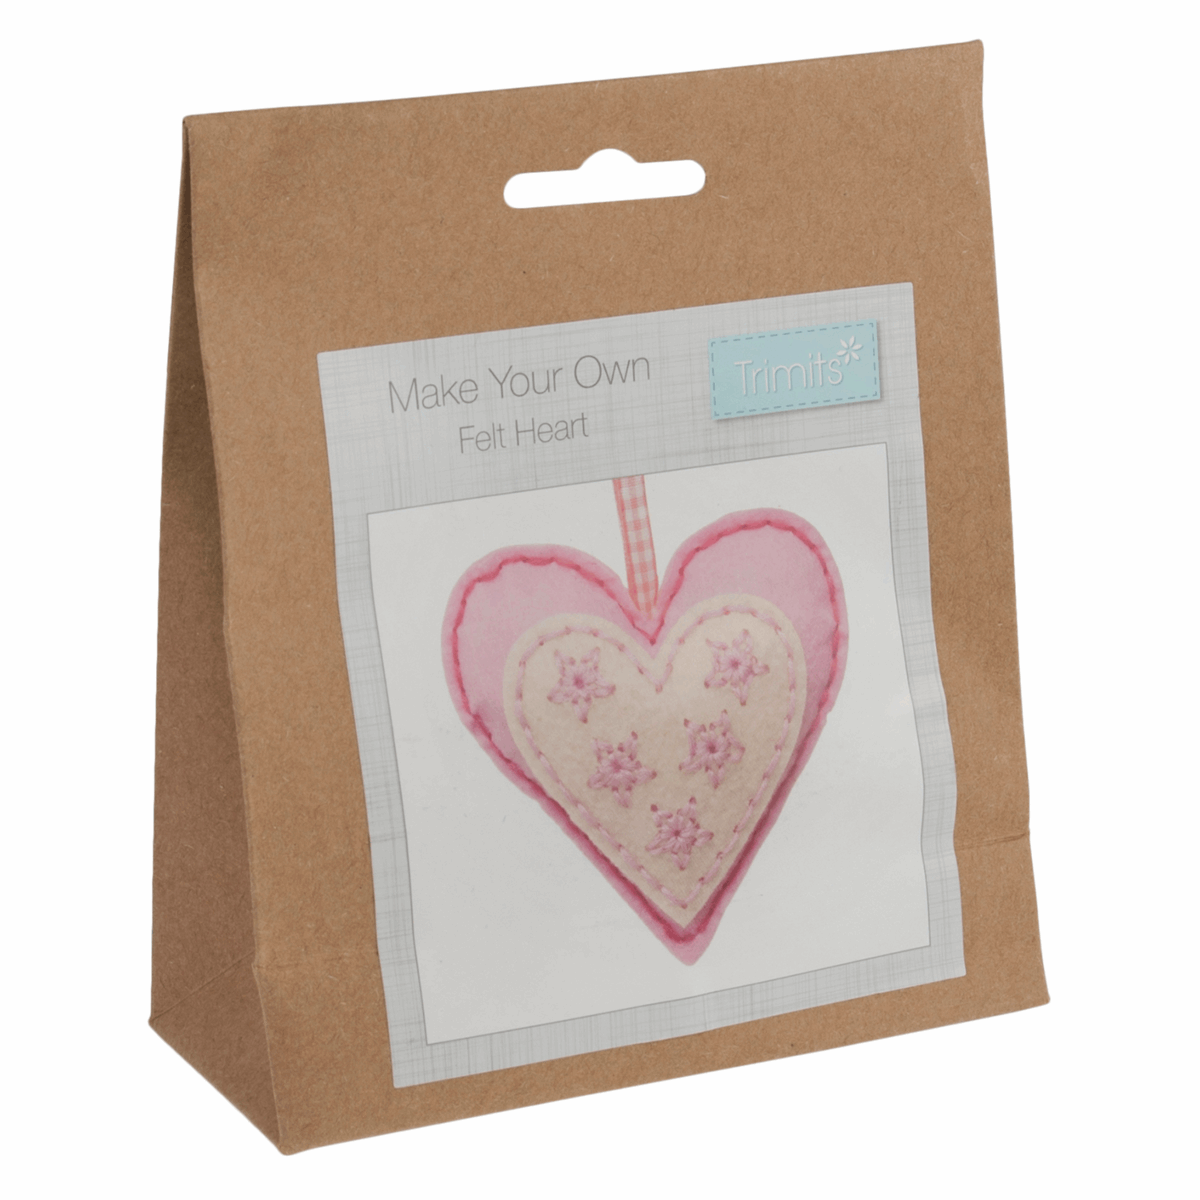 Trimits Felt Decoration Kit: Heart